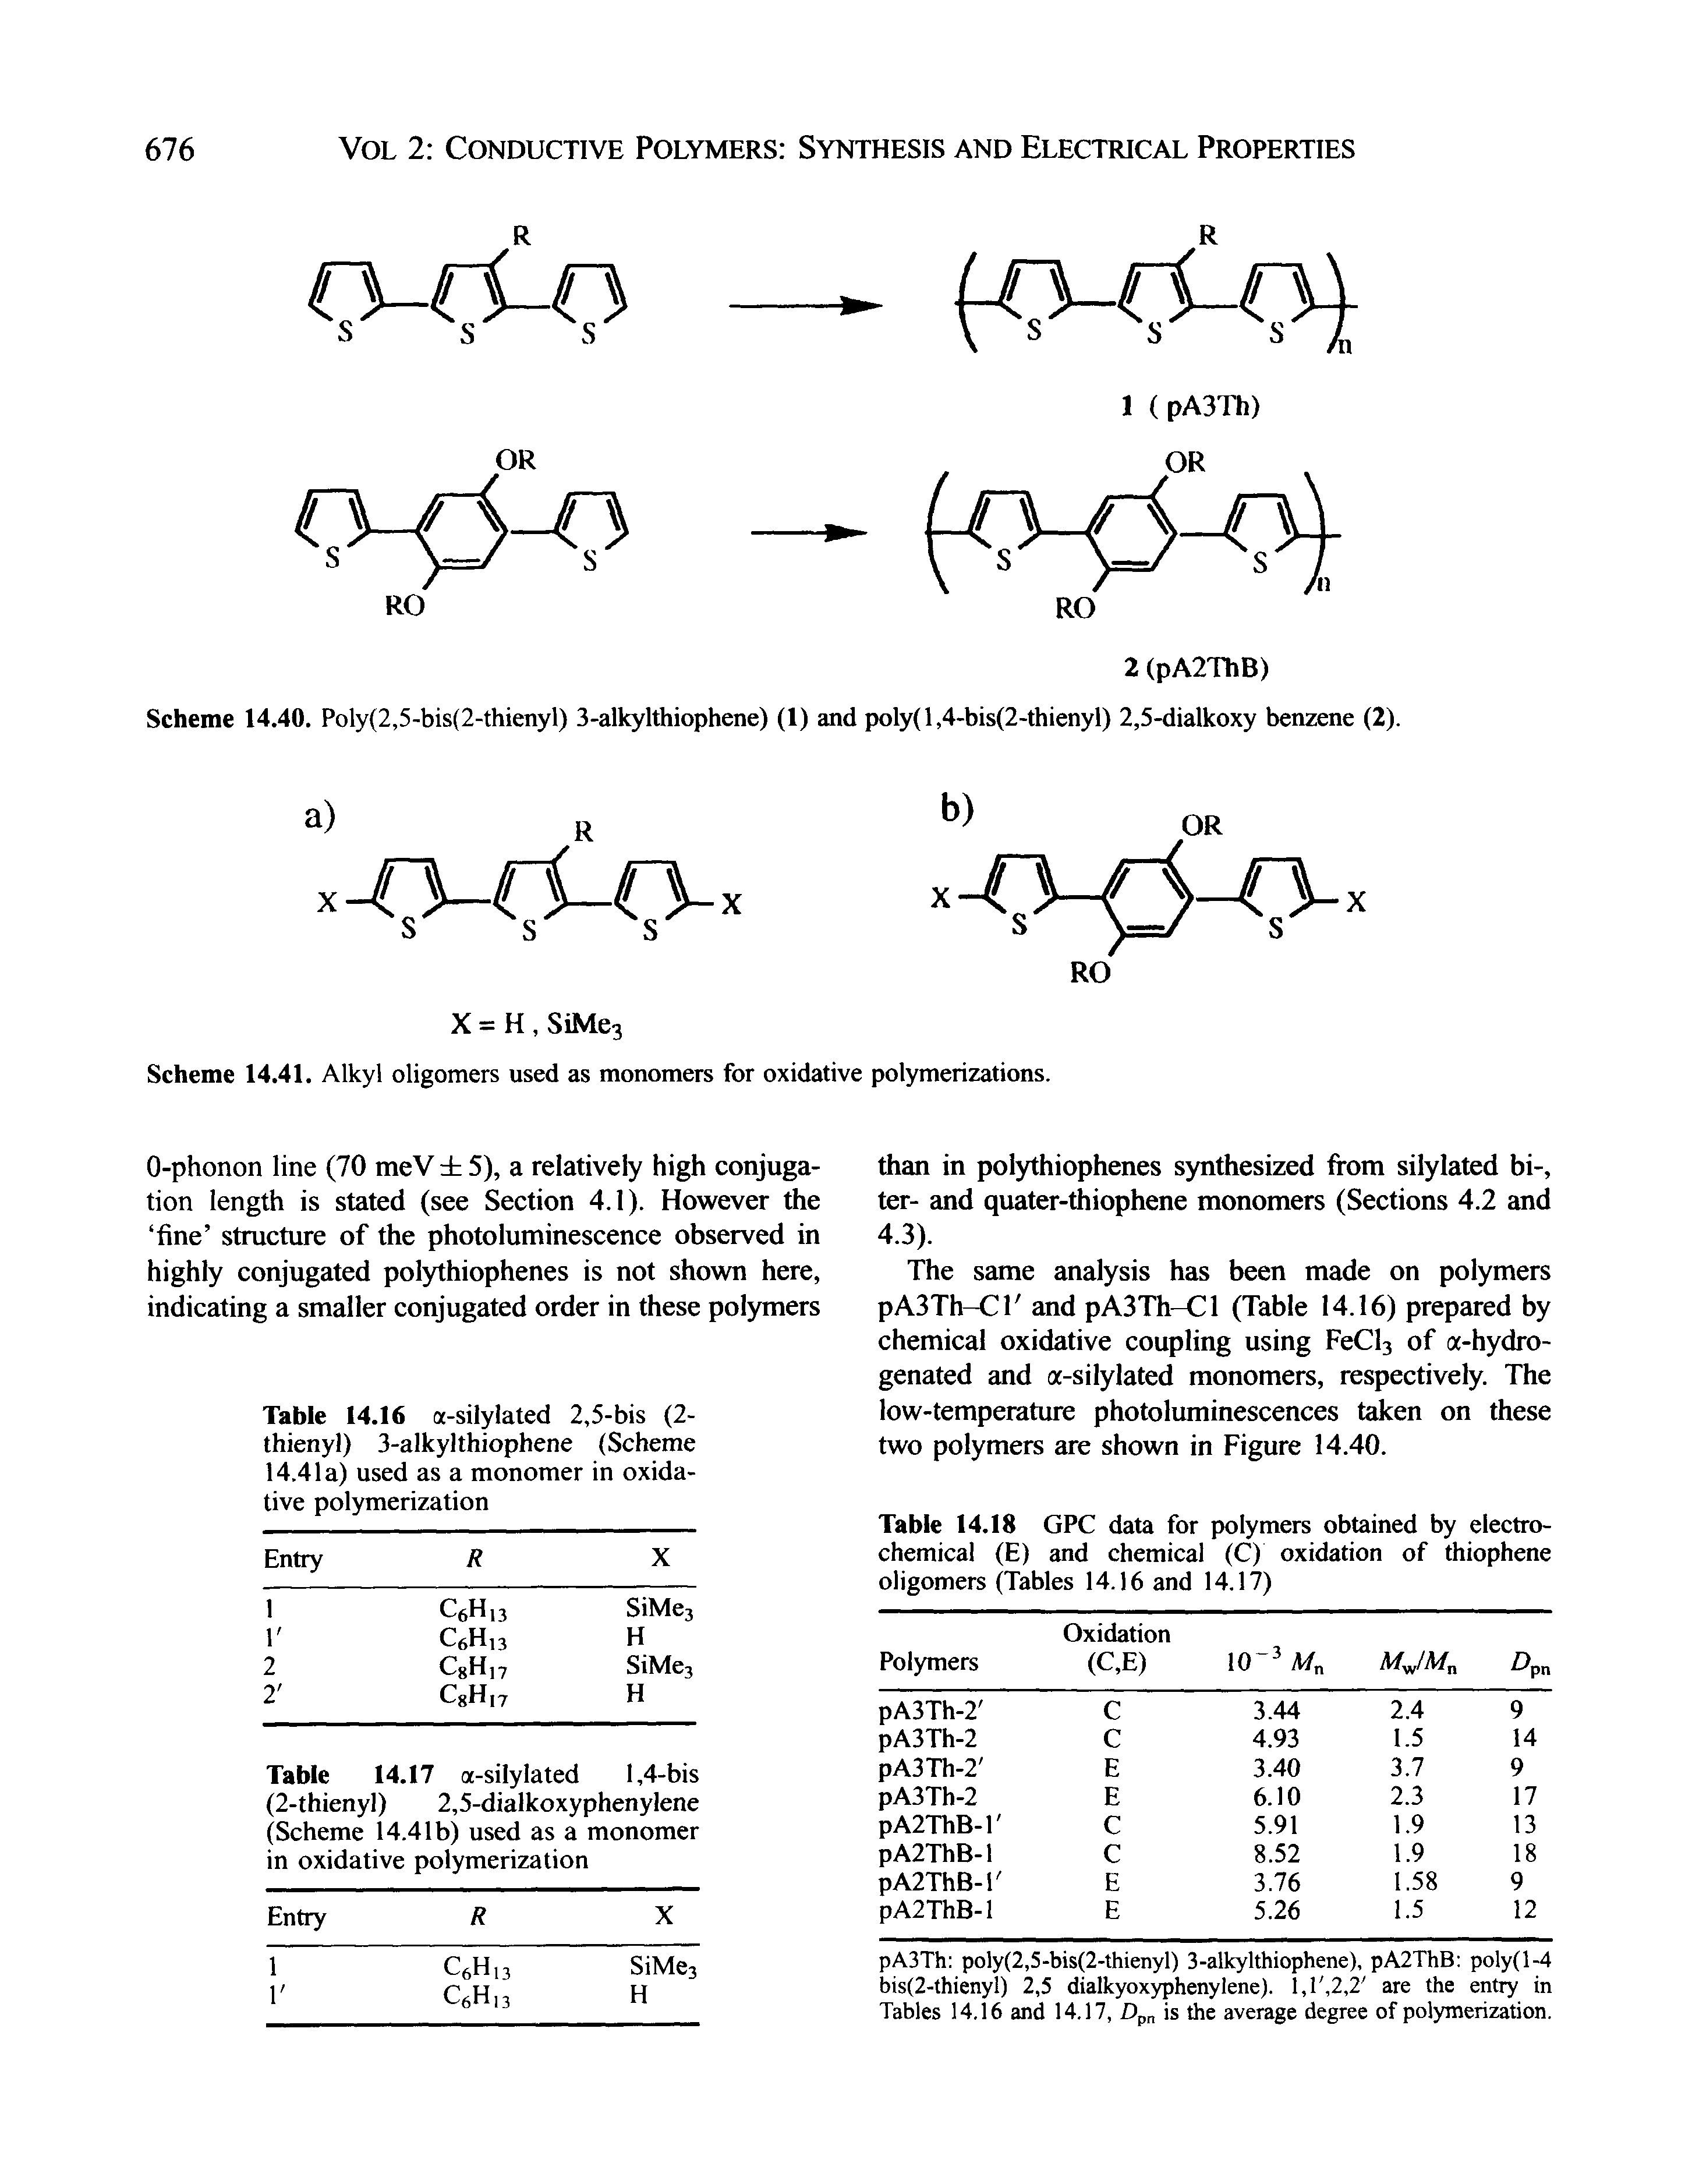 Scheme 14.41. Alkyl oligomers used as monomers for oxidative polymerizations.